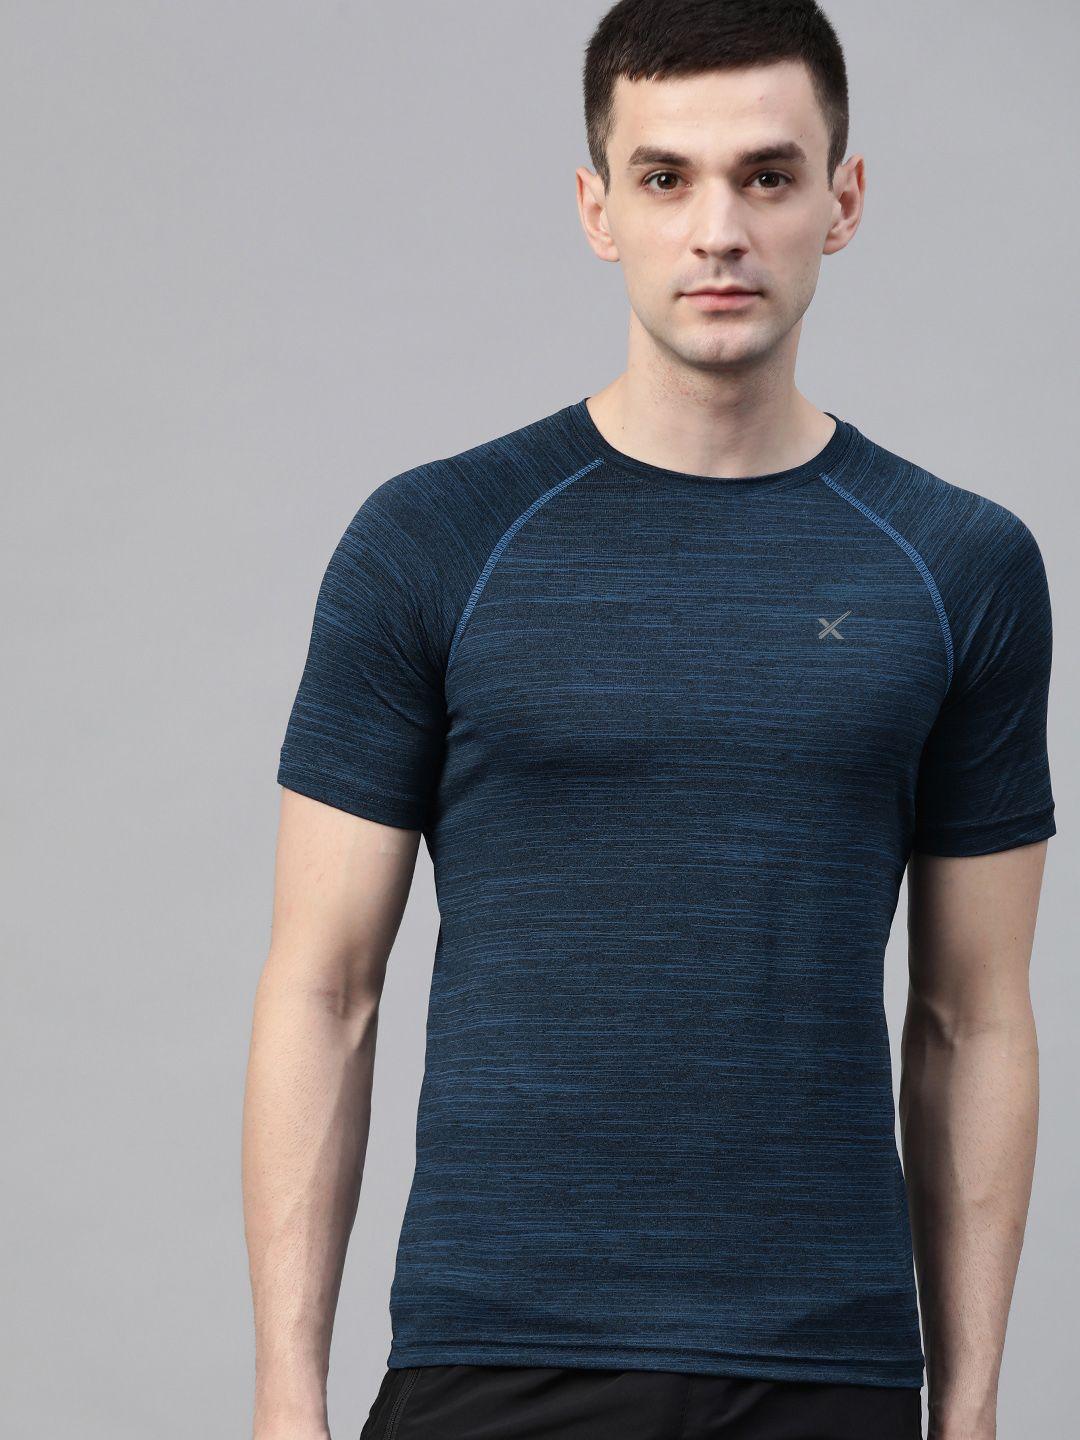 hrx-by-hrithik-roshan-men-navy-blue-solid-rapid-dry-running-t-shirt